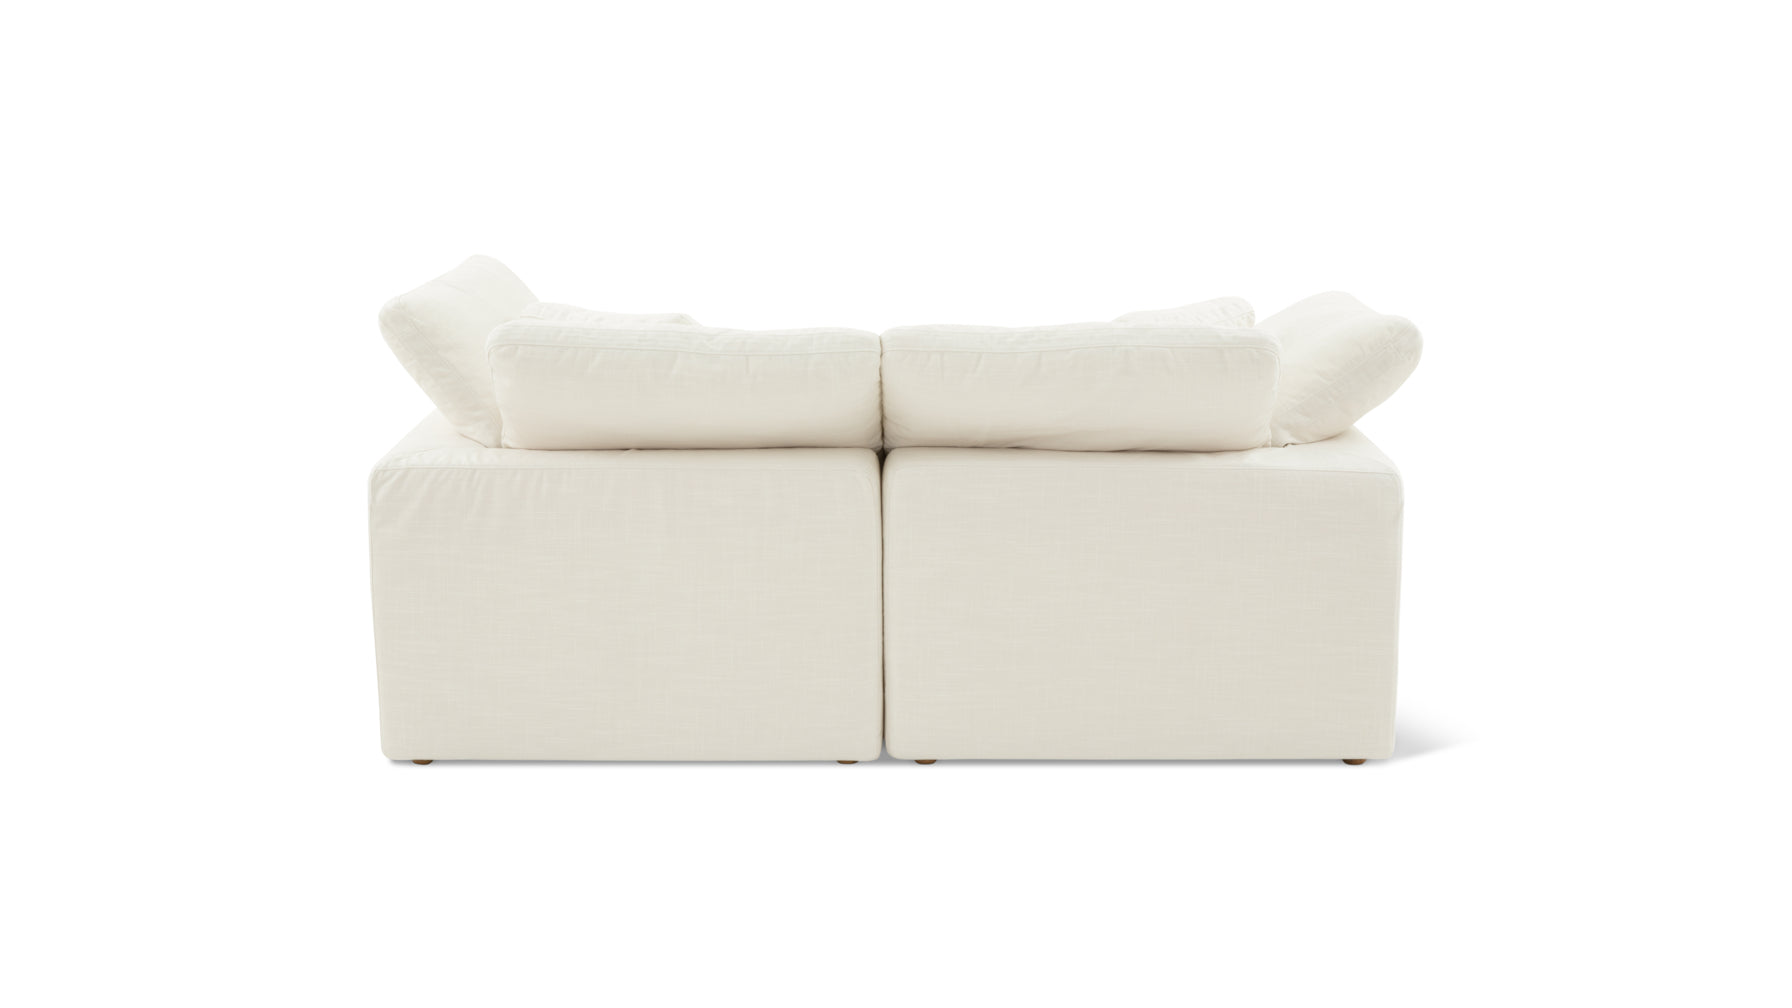 Movie Night™ 2-Piece Modular Sofa, Large, Cream Linen - Image 7